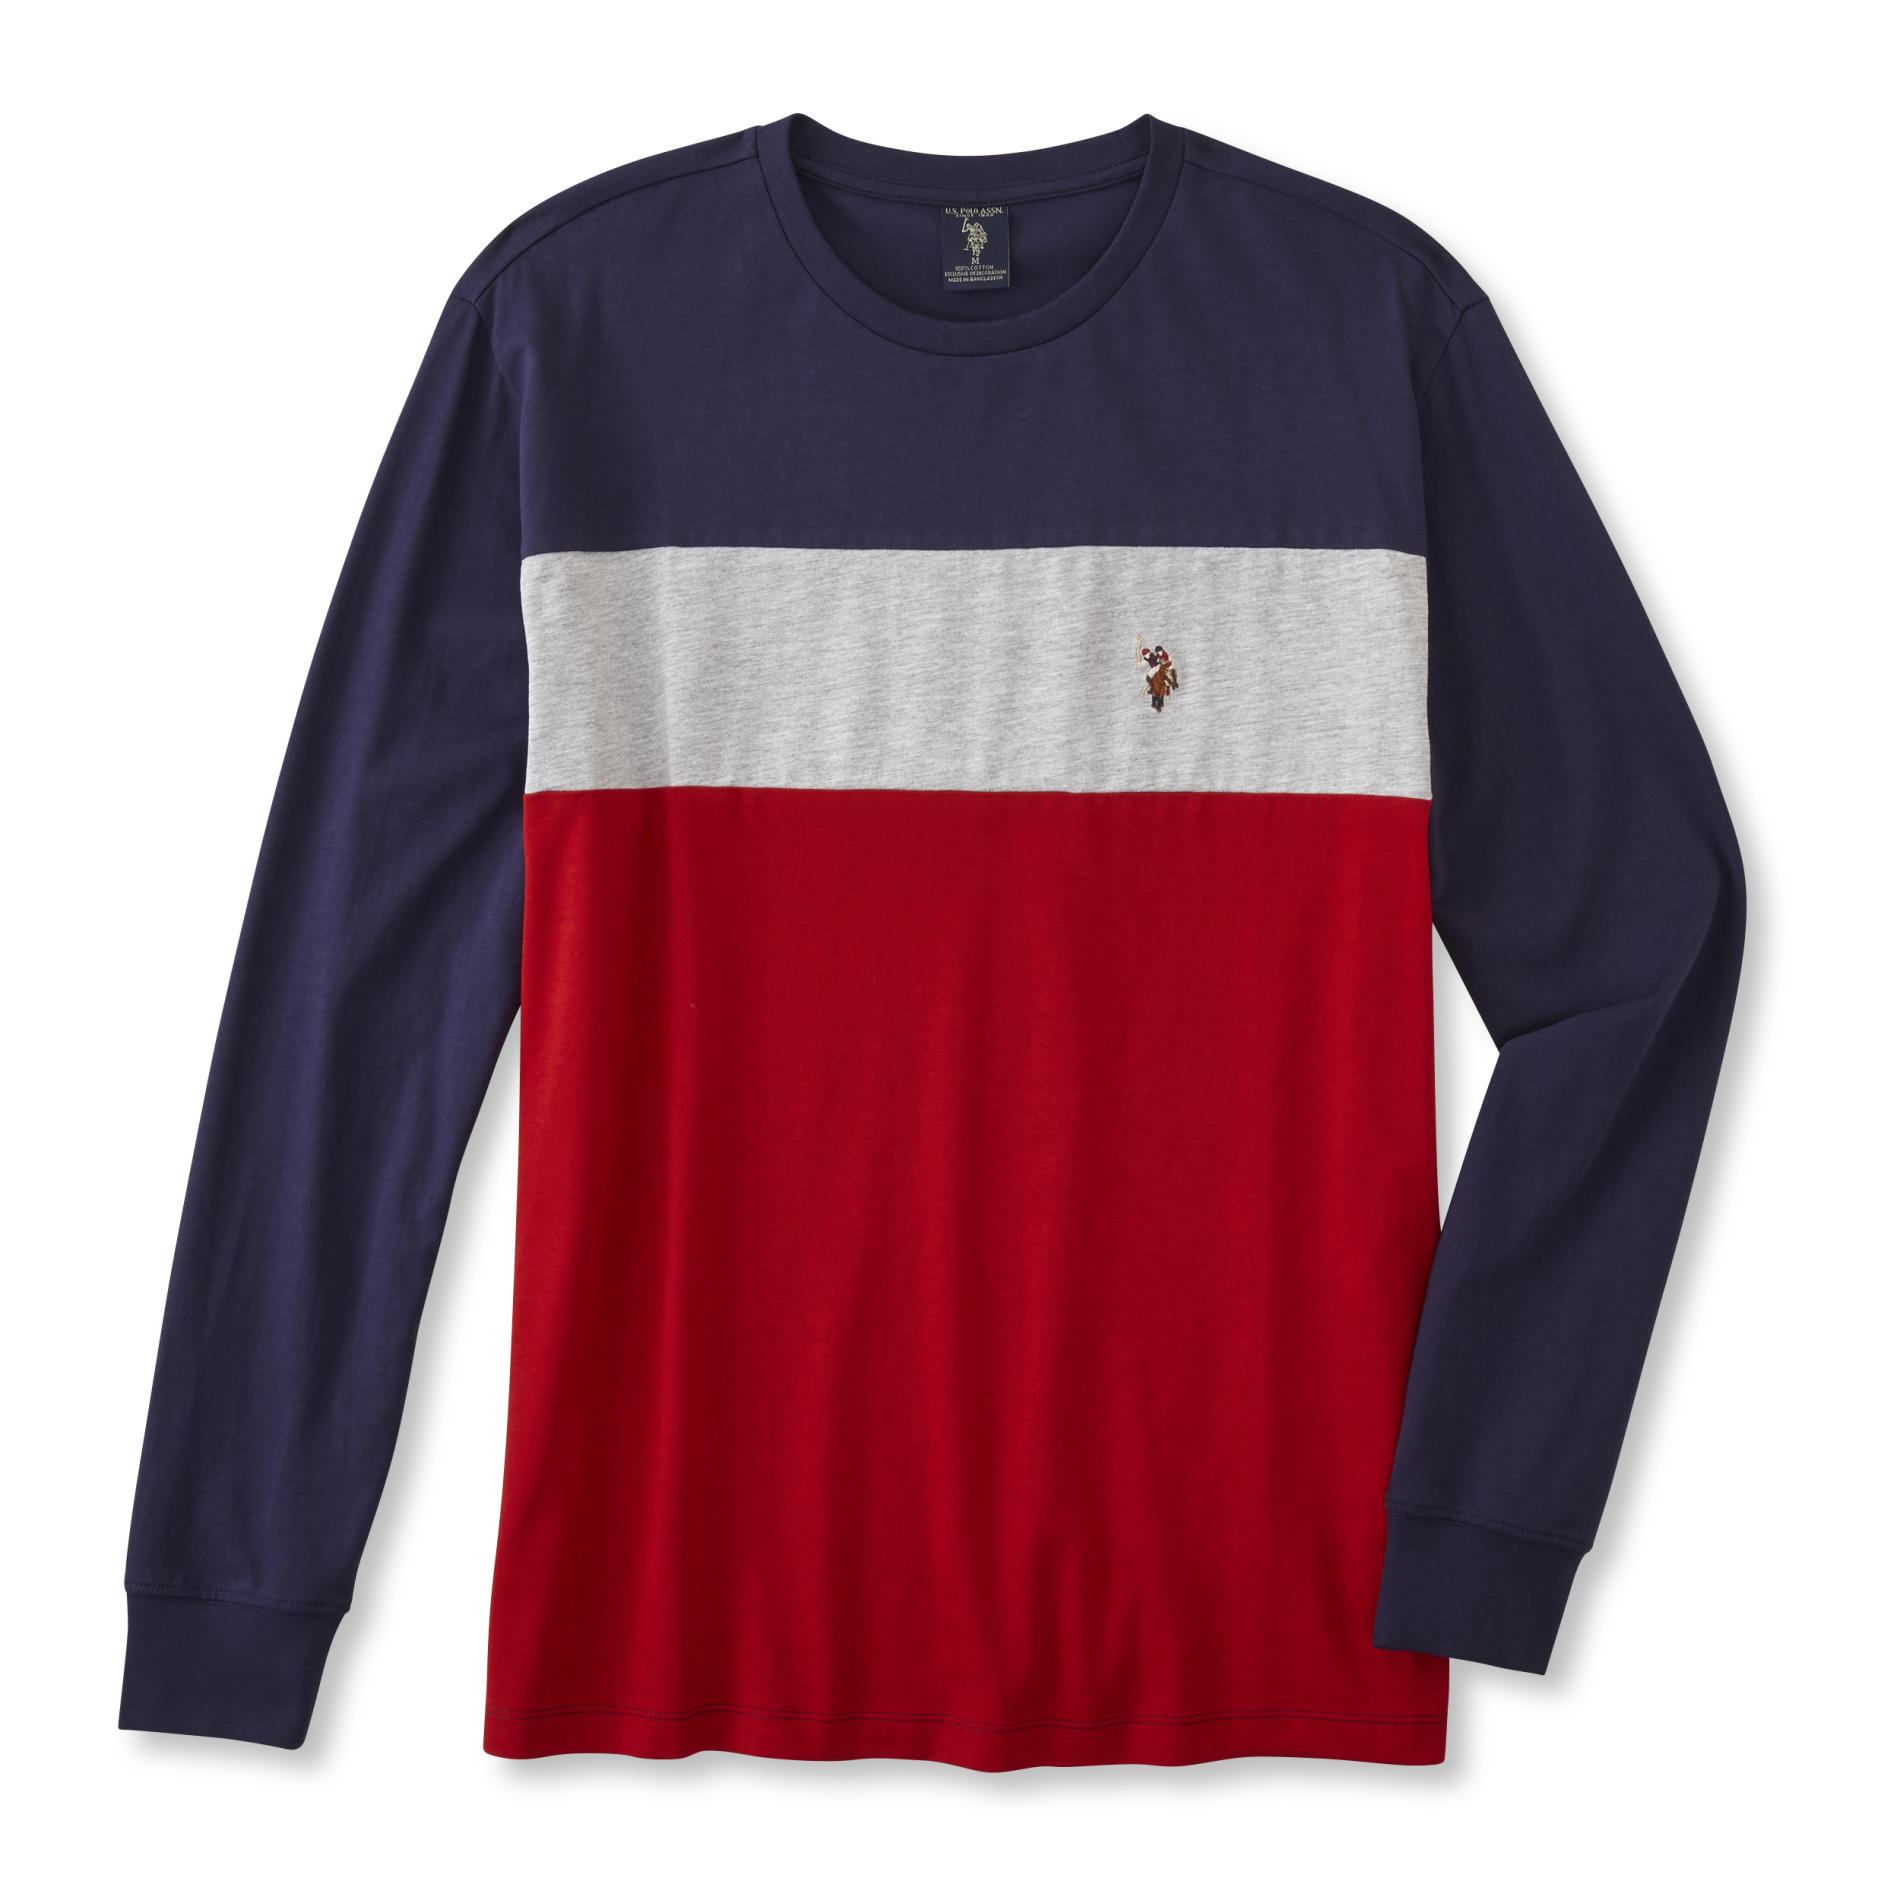 U.S. Polo Assn. Men's Long-Sleeve Shirt - Colorblock